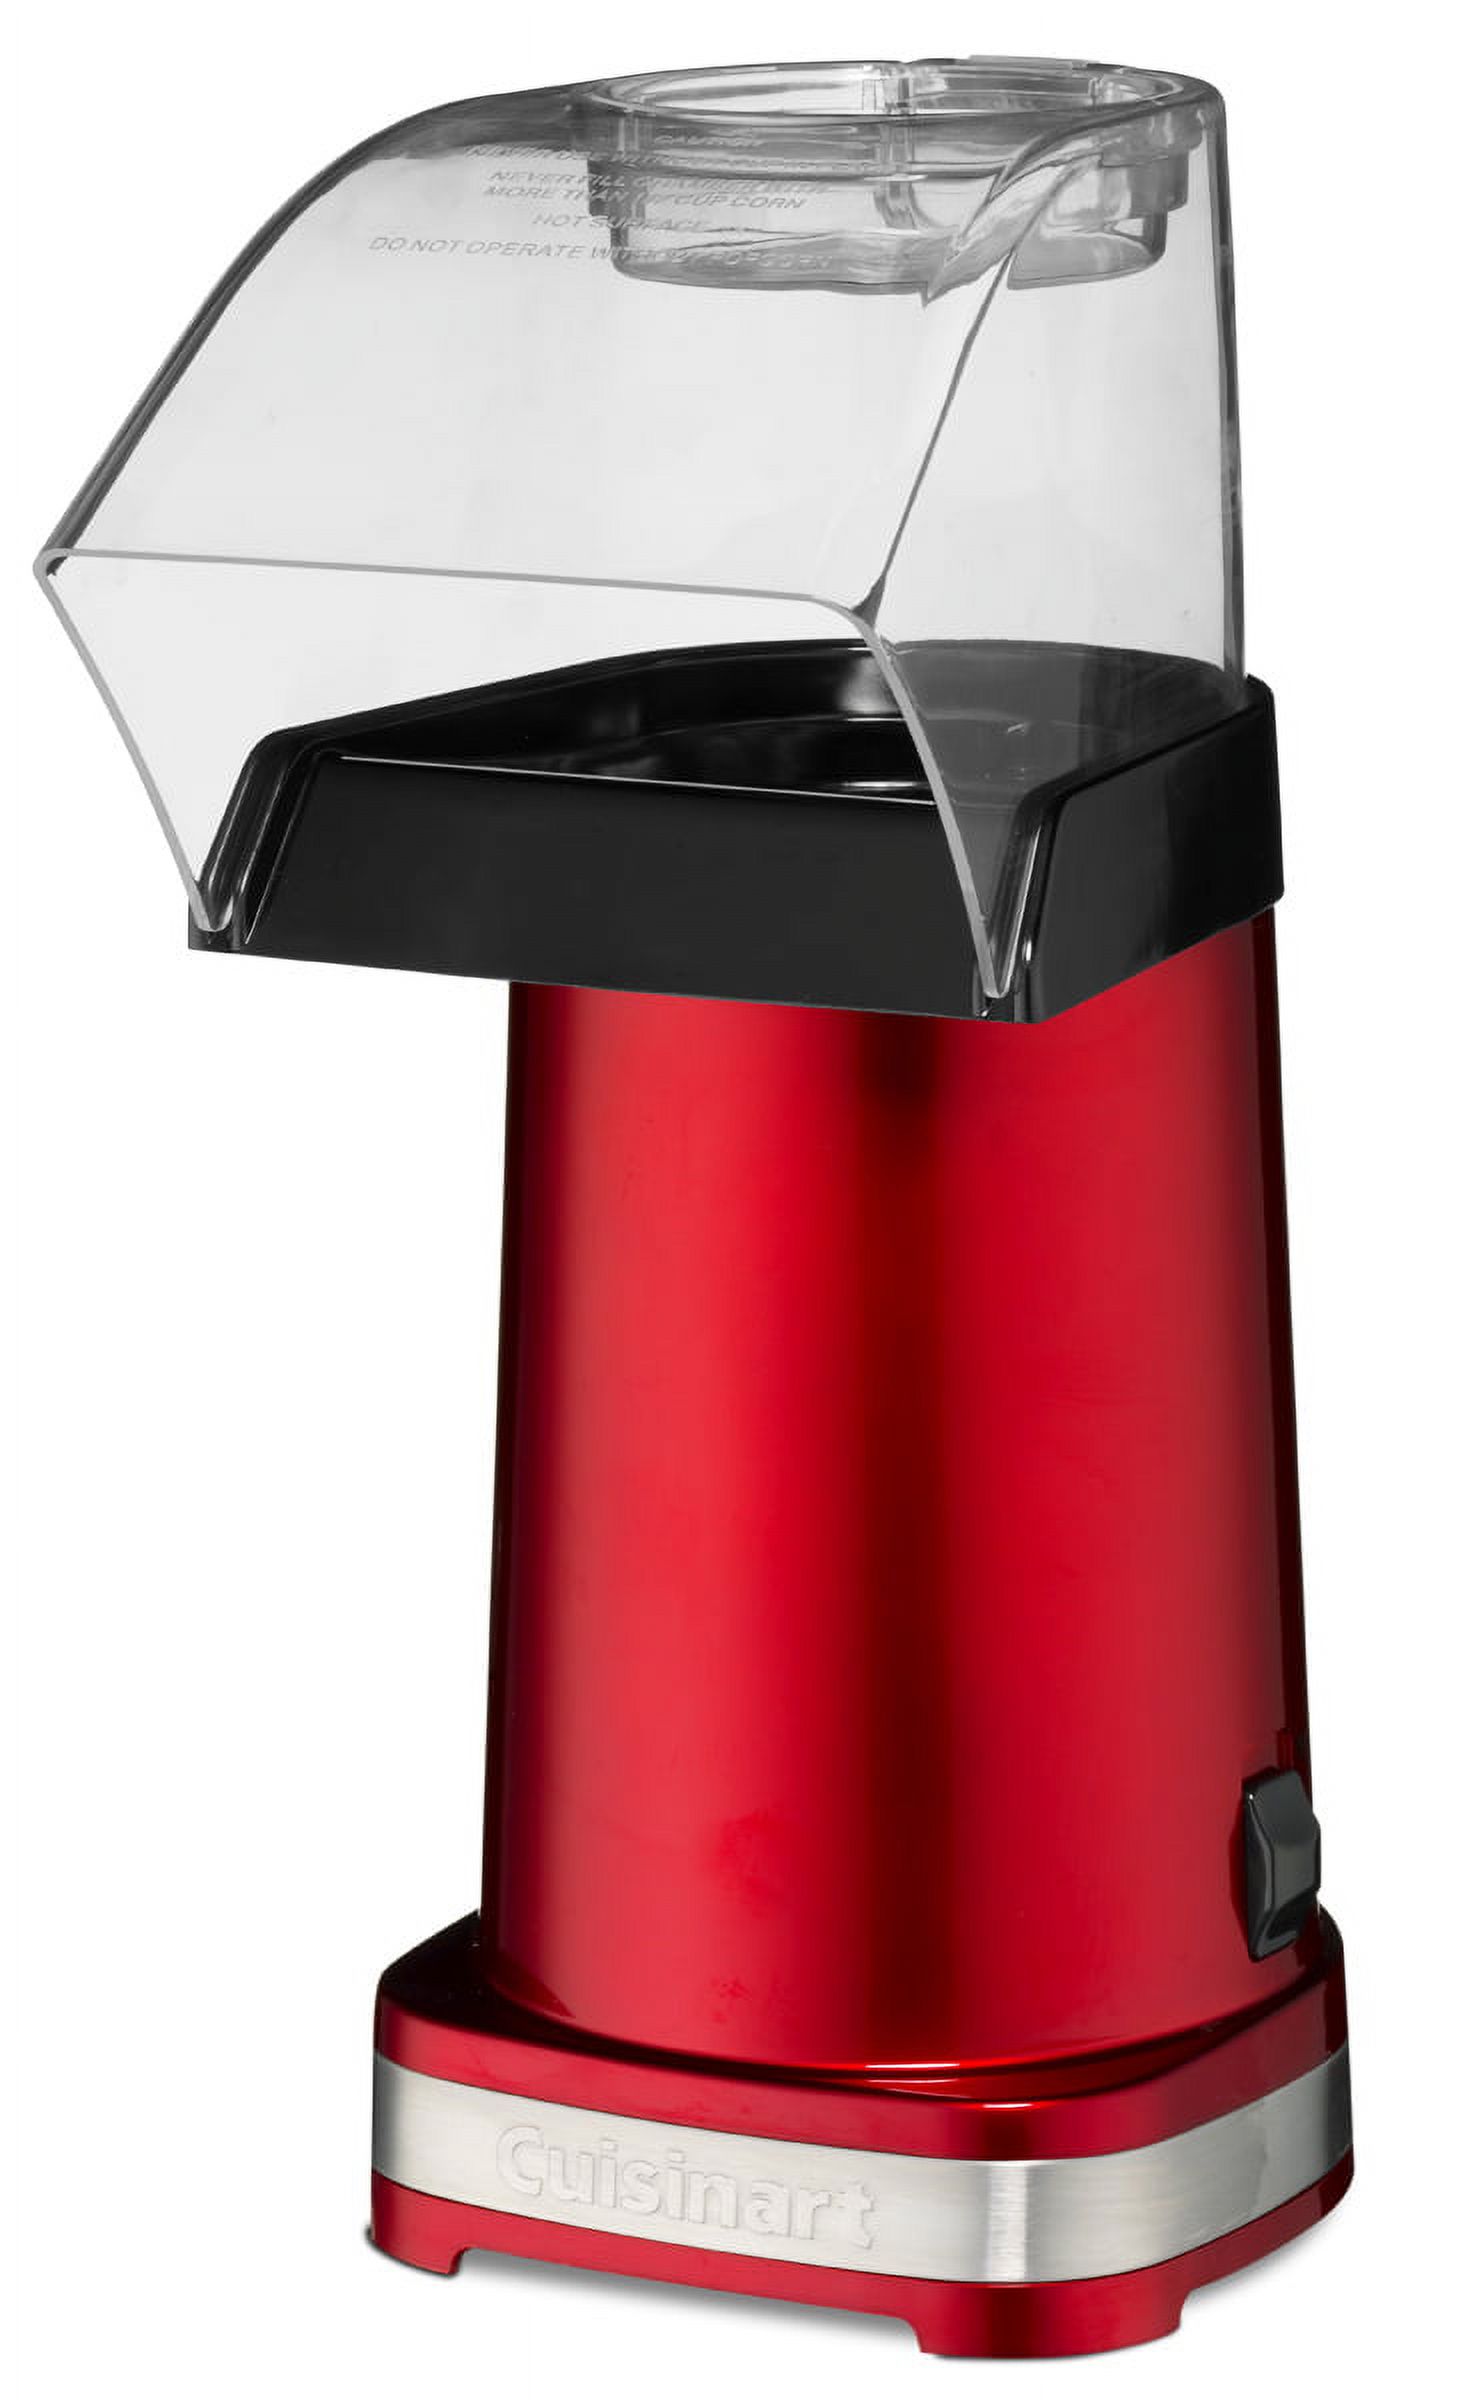 Cuisinart 1500-Watt EasyPop Hot Air Popcorn Maker, Metallic Red - image 1 of 2